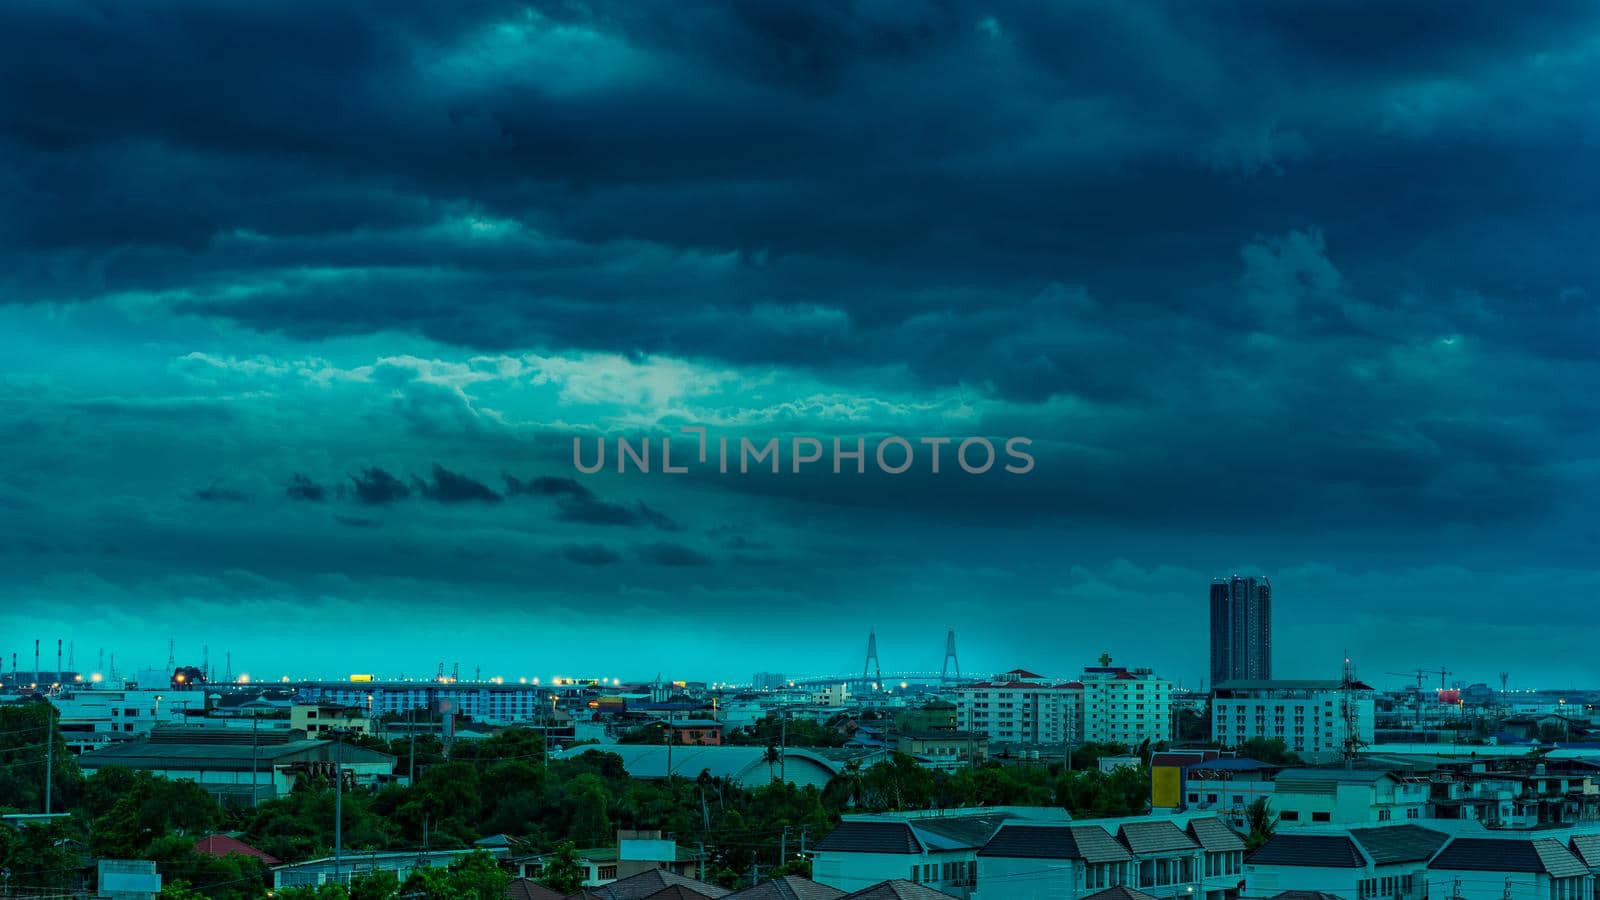 urban and raincloud sky in cityscape